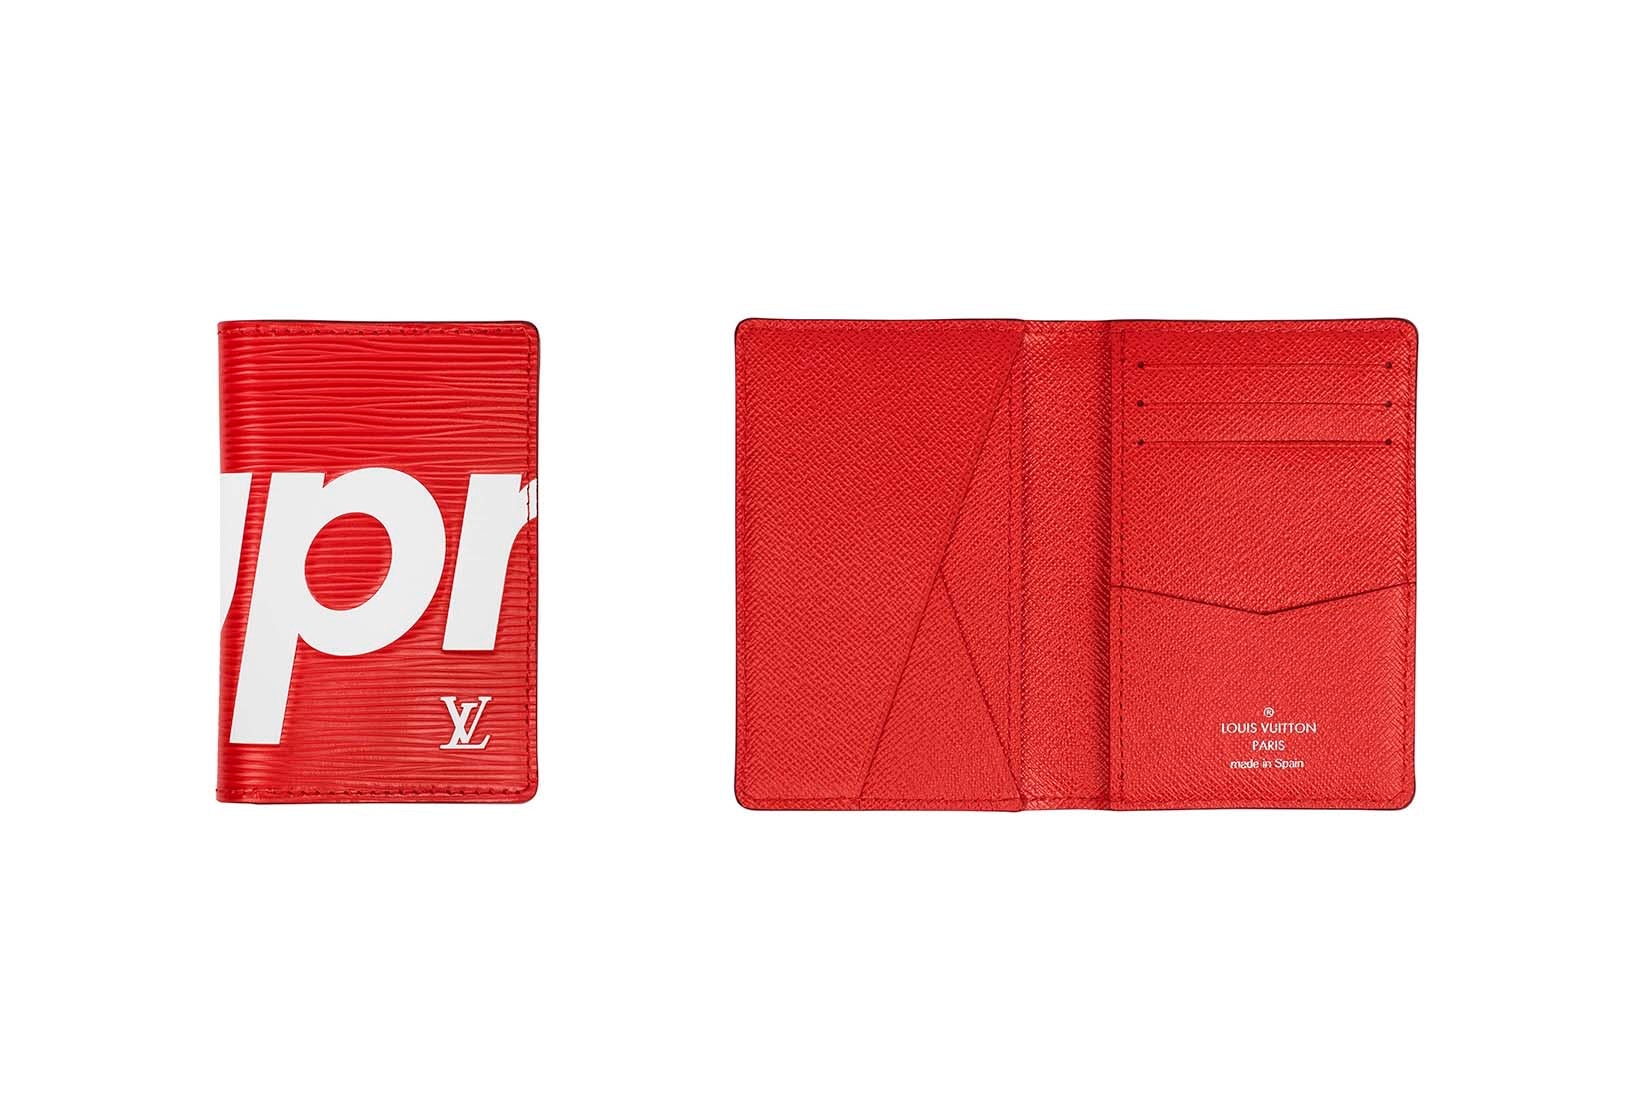 Supreme x Louis Vuitton Collection 聯名系列完整公開